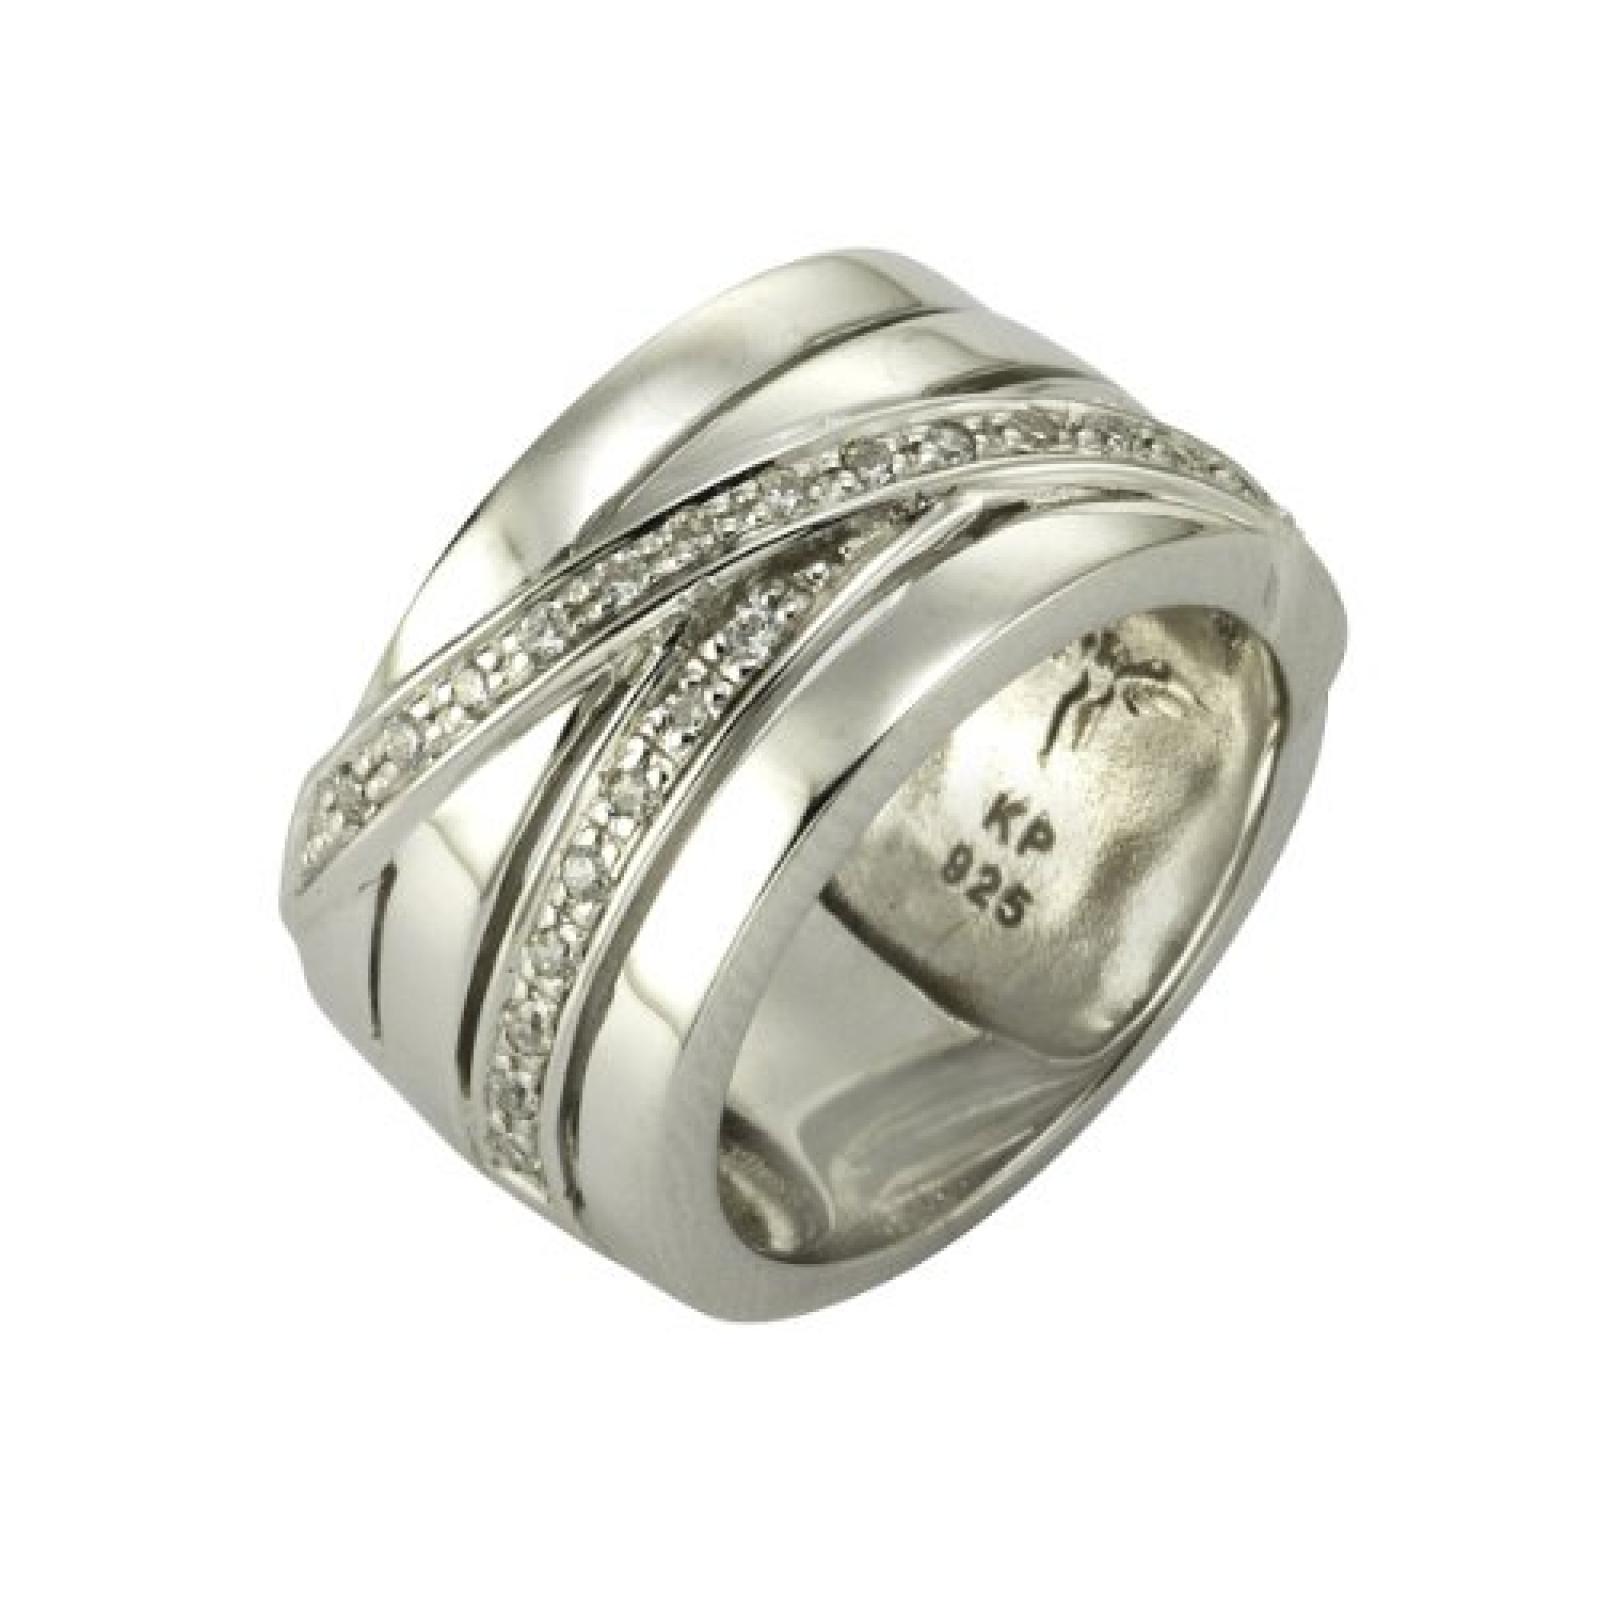 Celesta Damen-Ring 925 Sterling Silber Zirkonia weiß 60 (19.1) 273270870-019 